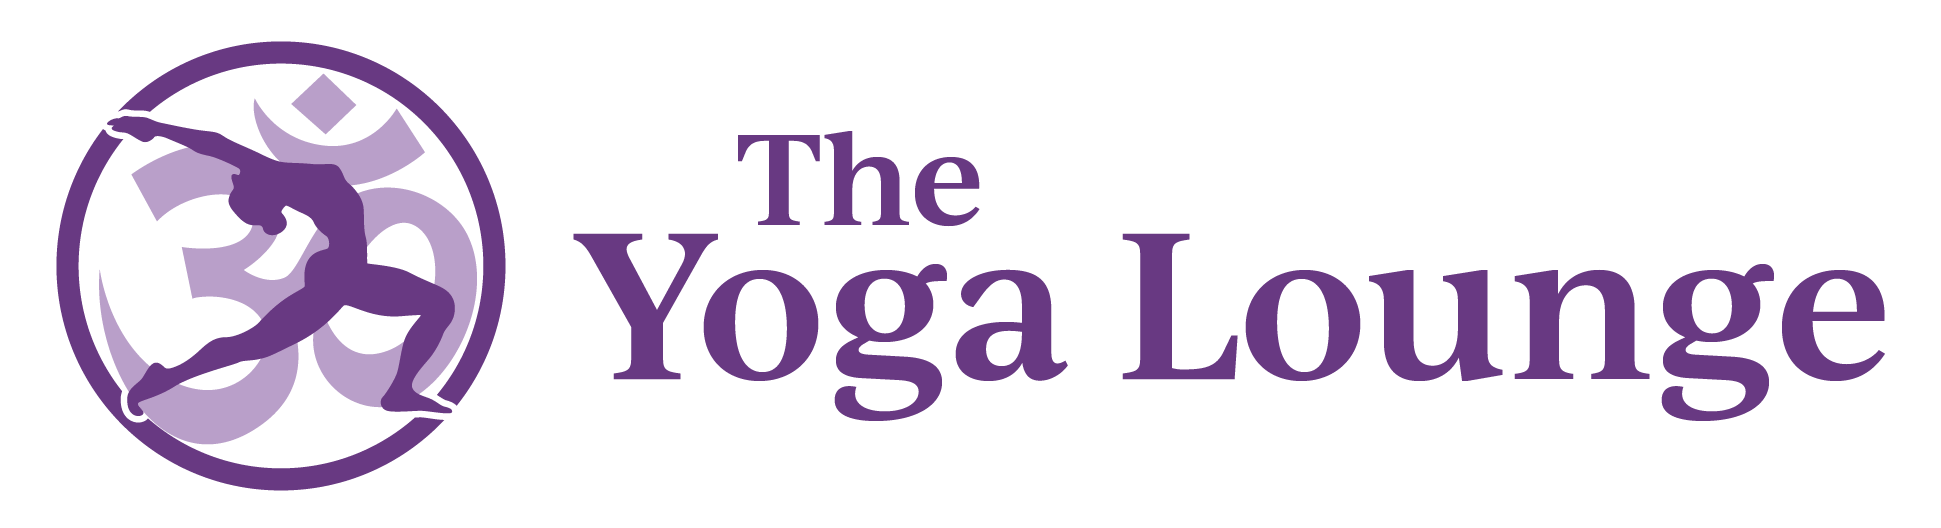 The Yoga Lounge